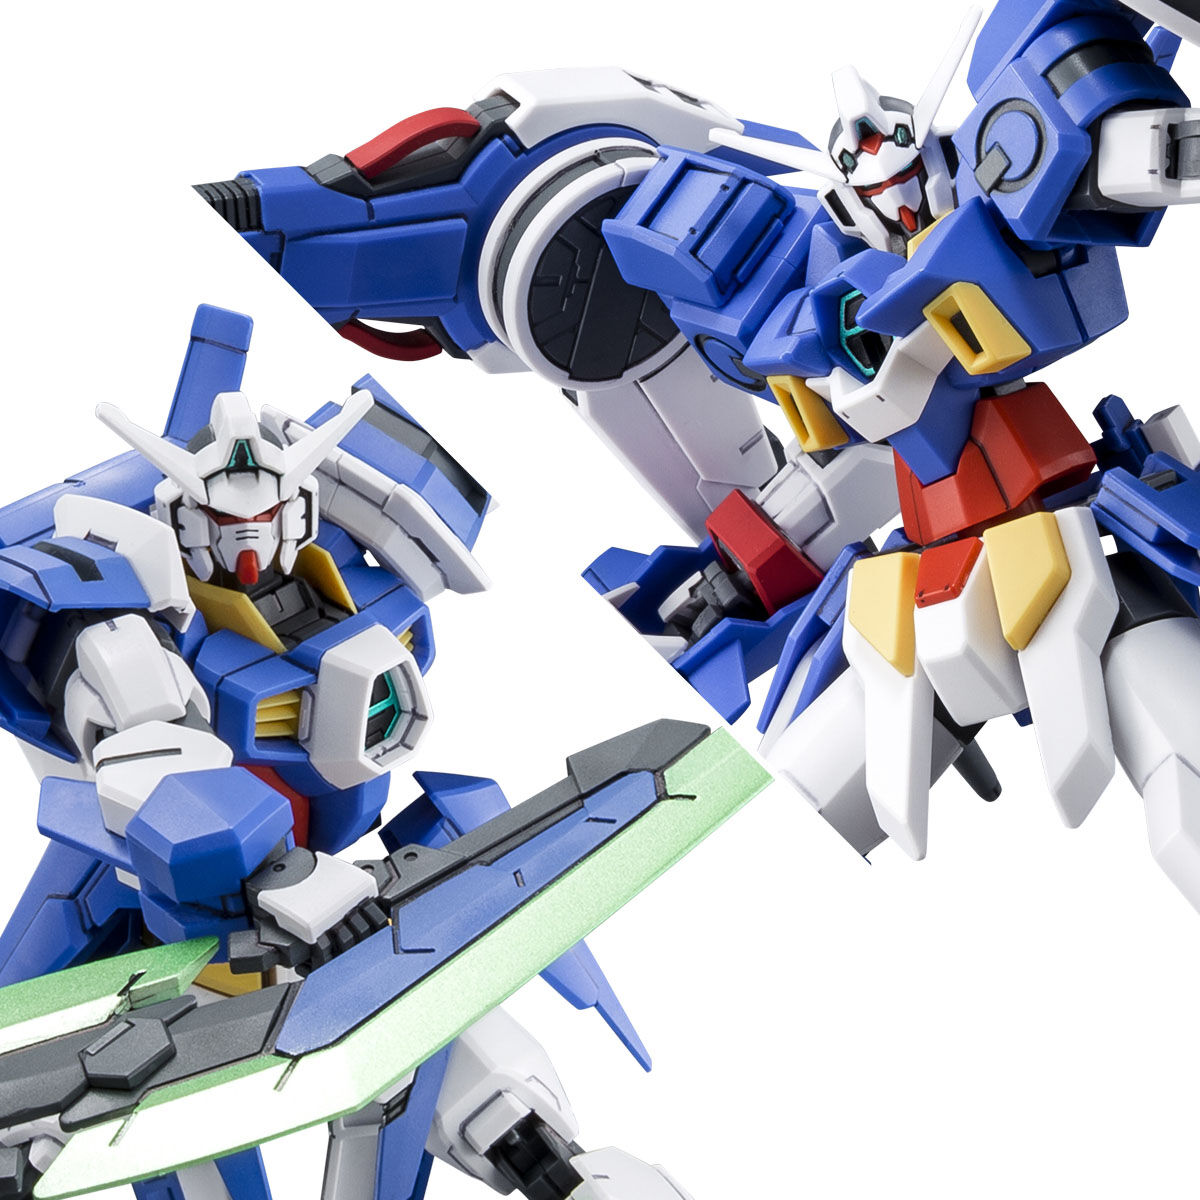 HGGA 1/144 AGE-1R Gundam AGE-1 Razor + AGE-2A Gundam AGE-2 Artimes